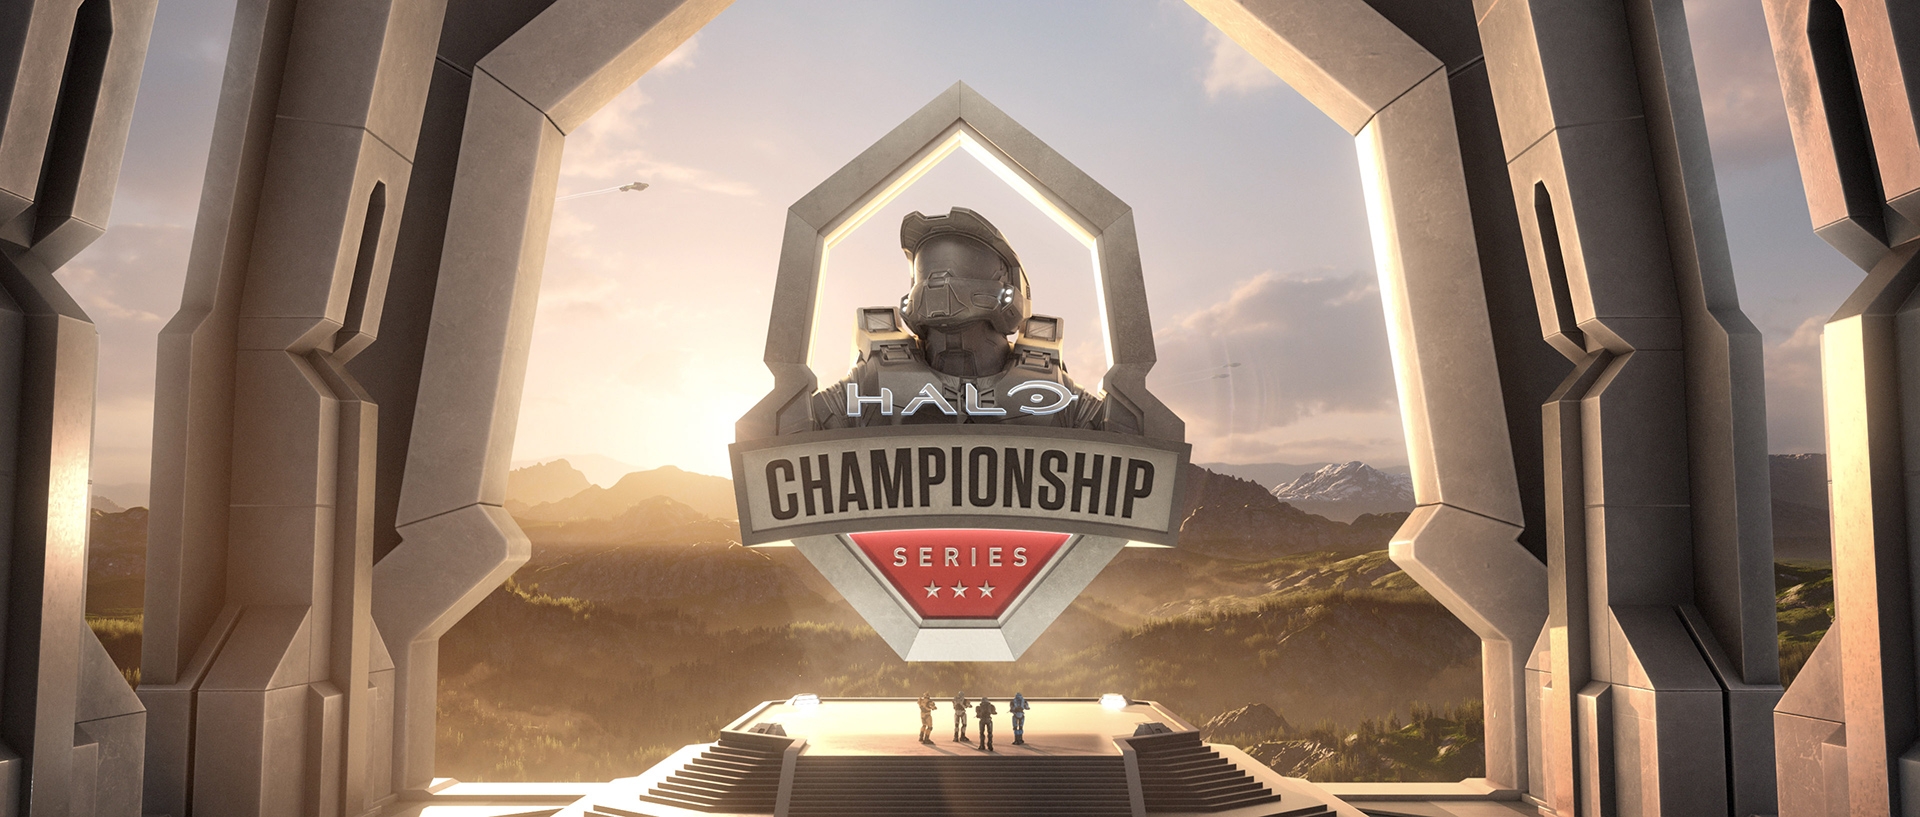 Capacity Studios : Halo Championship Series